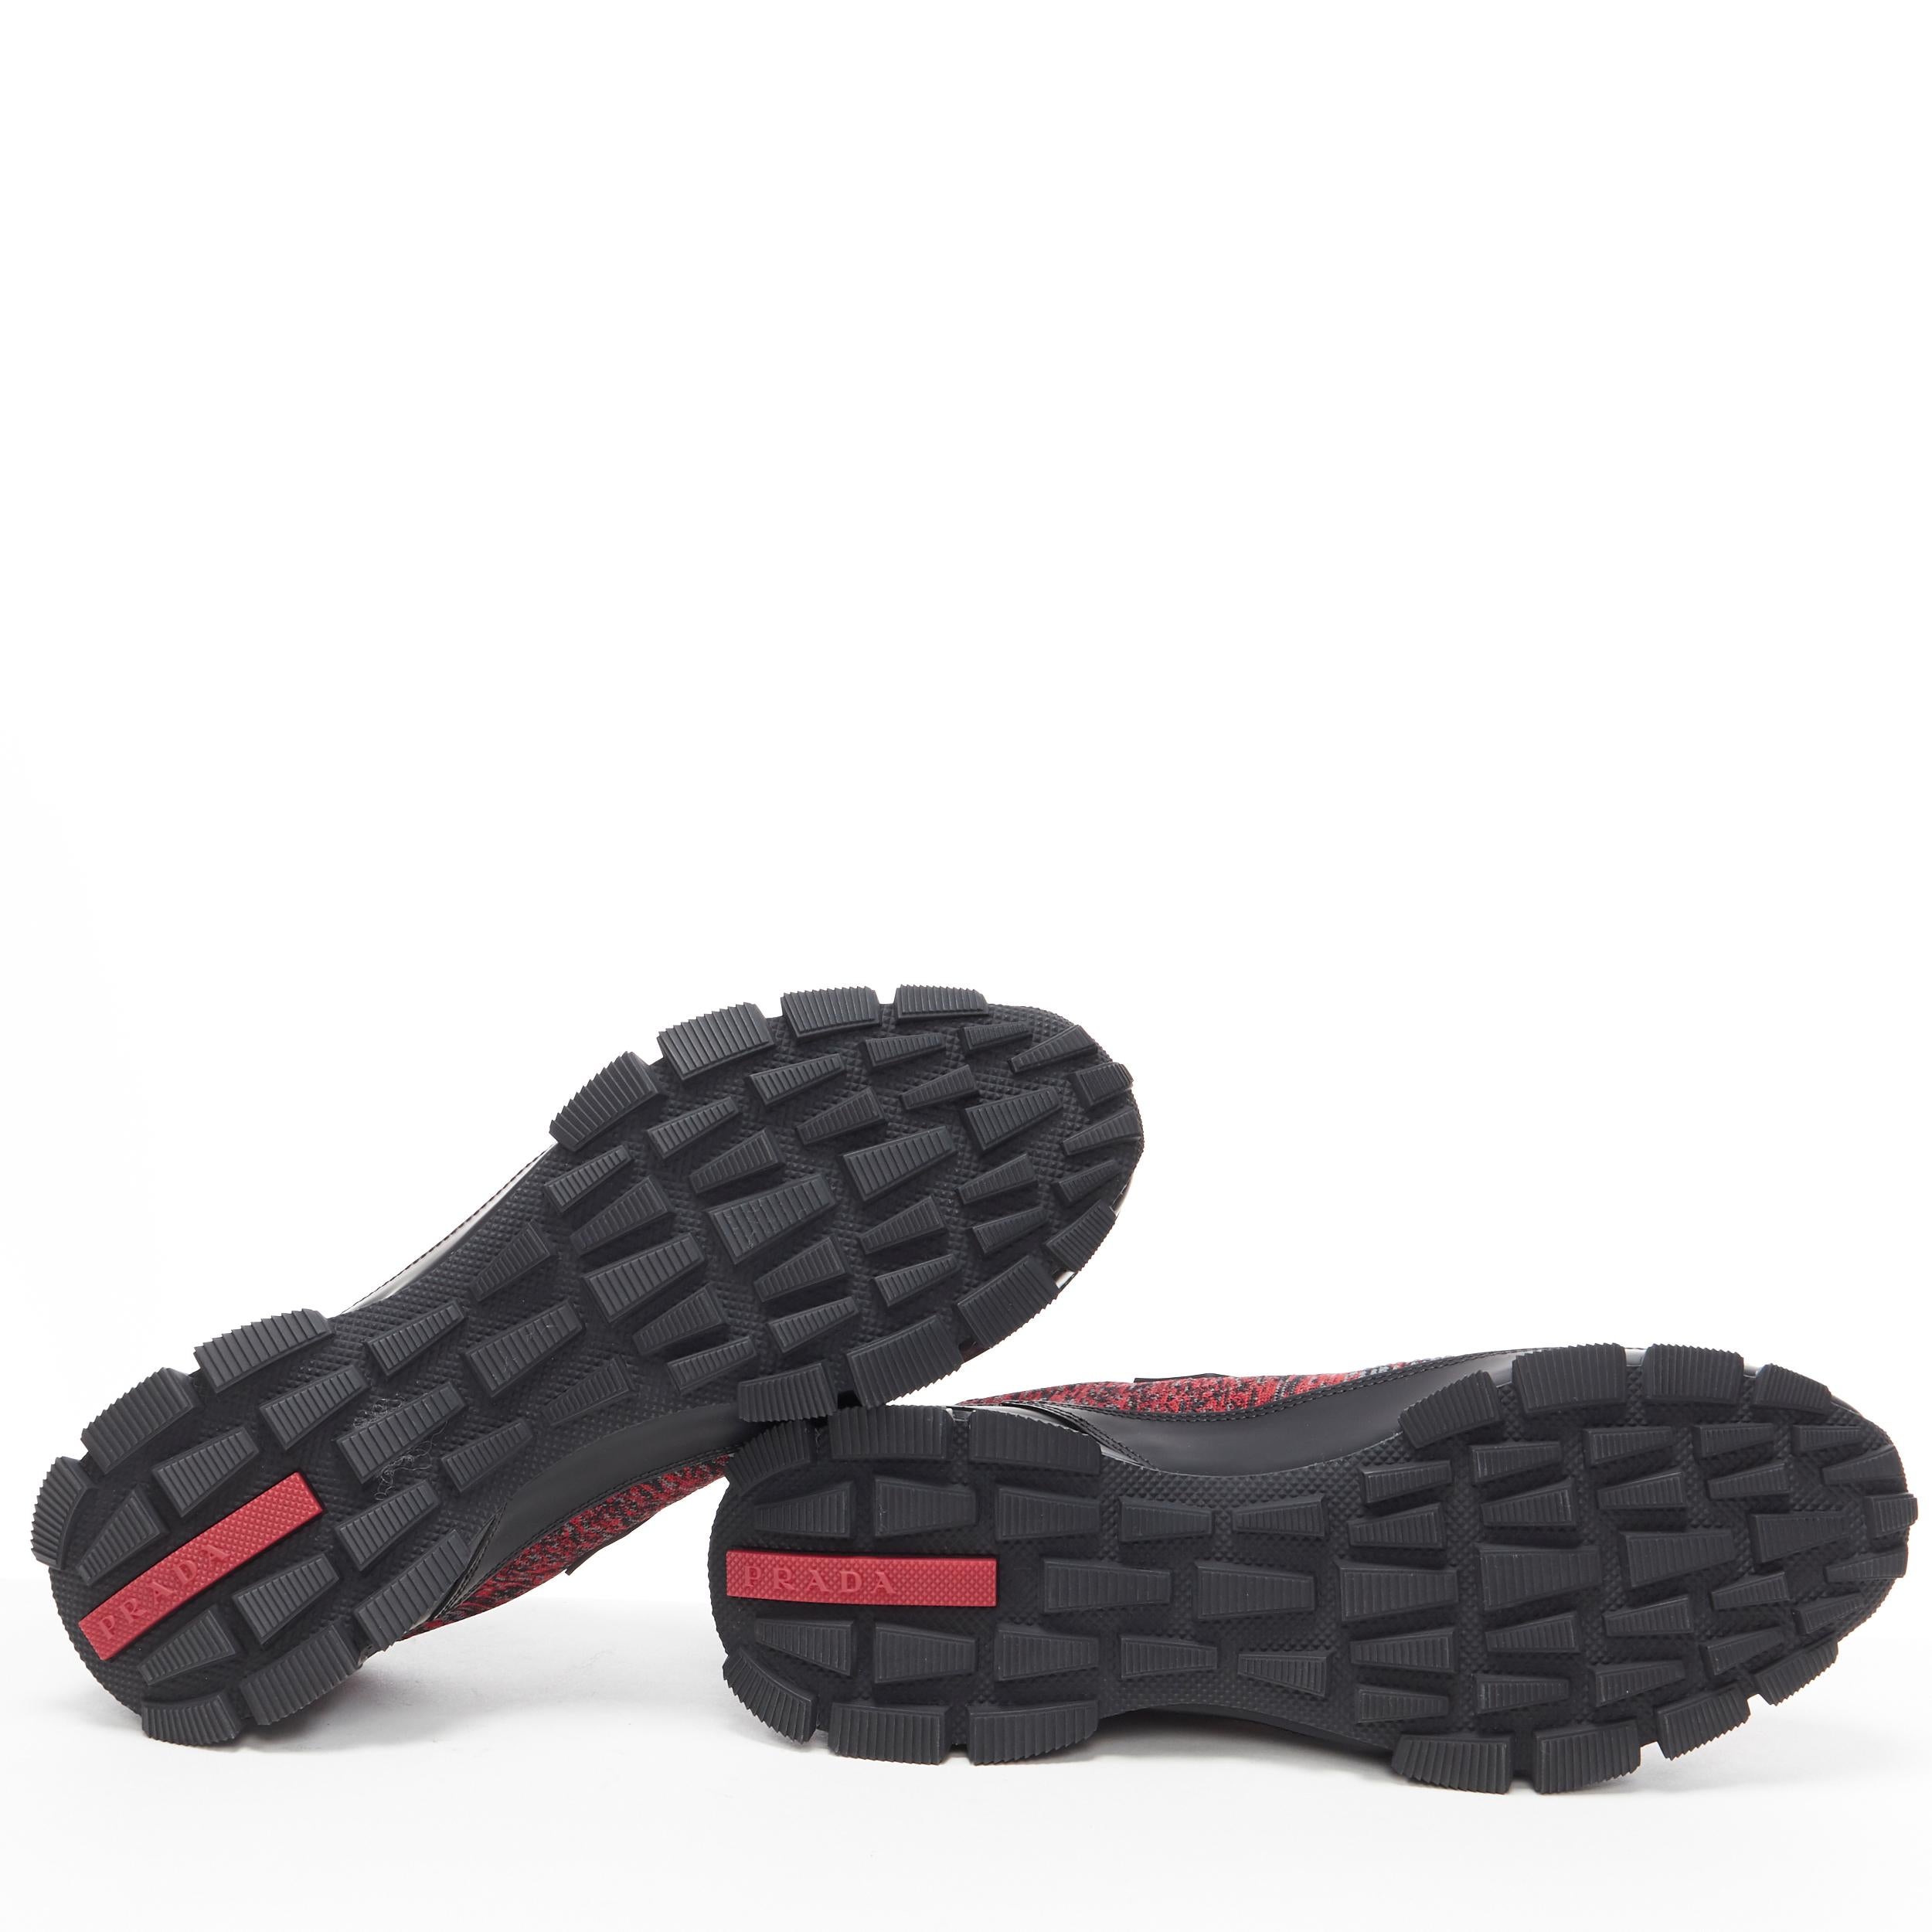 Black new PRADA Crossection Knit Low red black sock low runner sneakers UK8 EU41